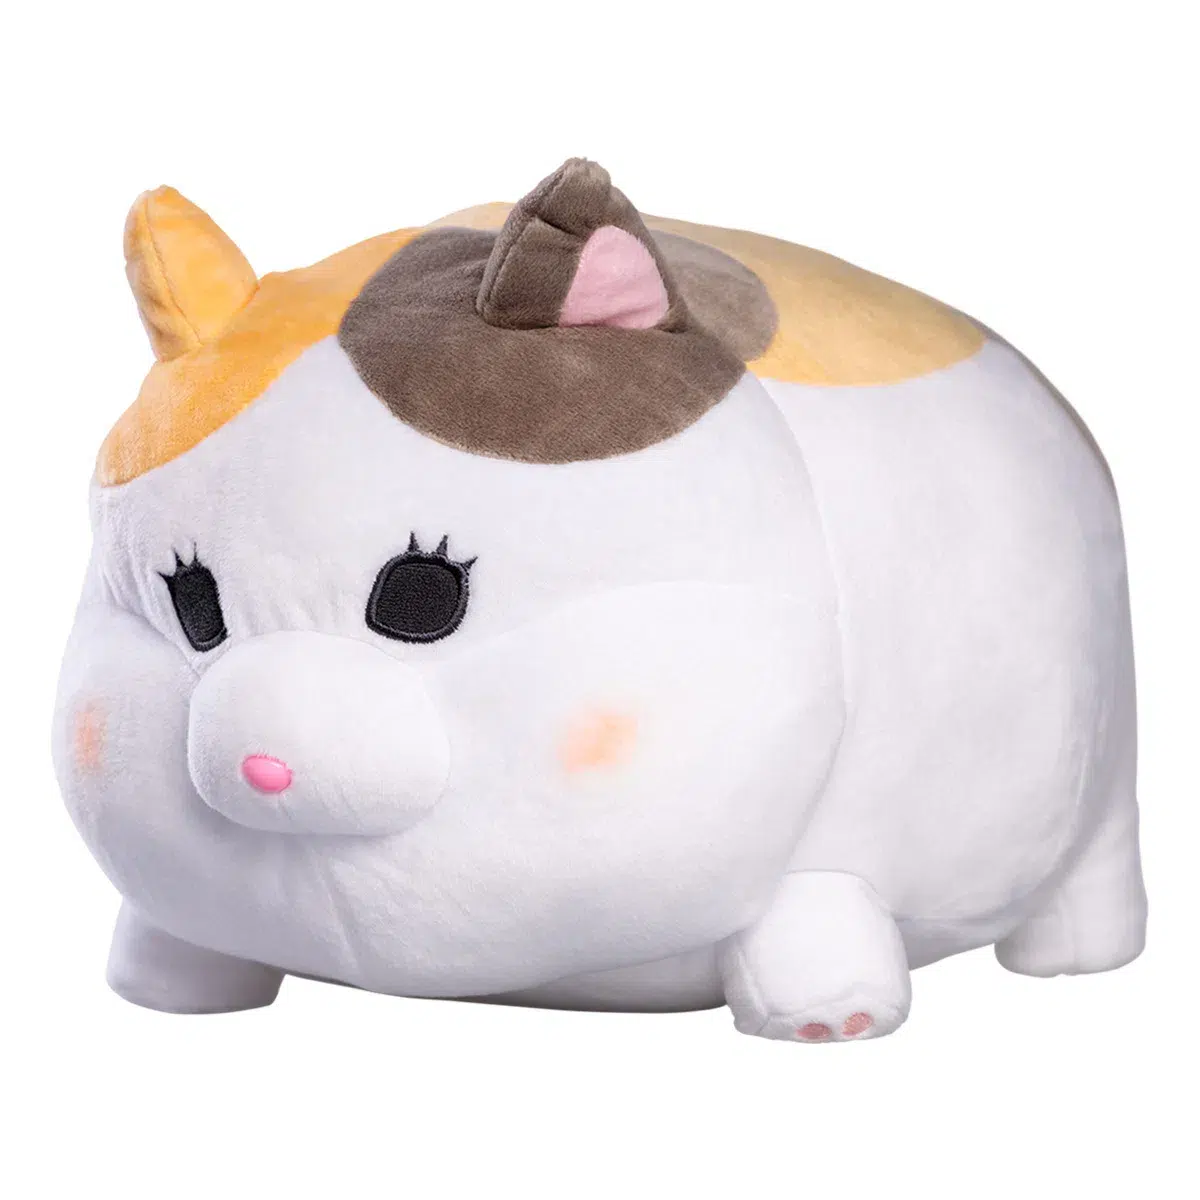 FINAL FANTASY XIV: HEAVENSWARD Soft Toy Cushion - Fat Cat (IT)